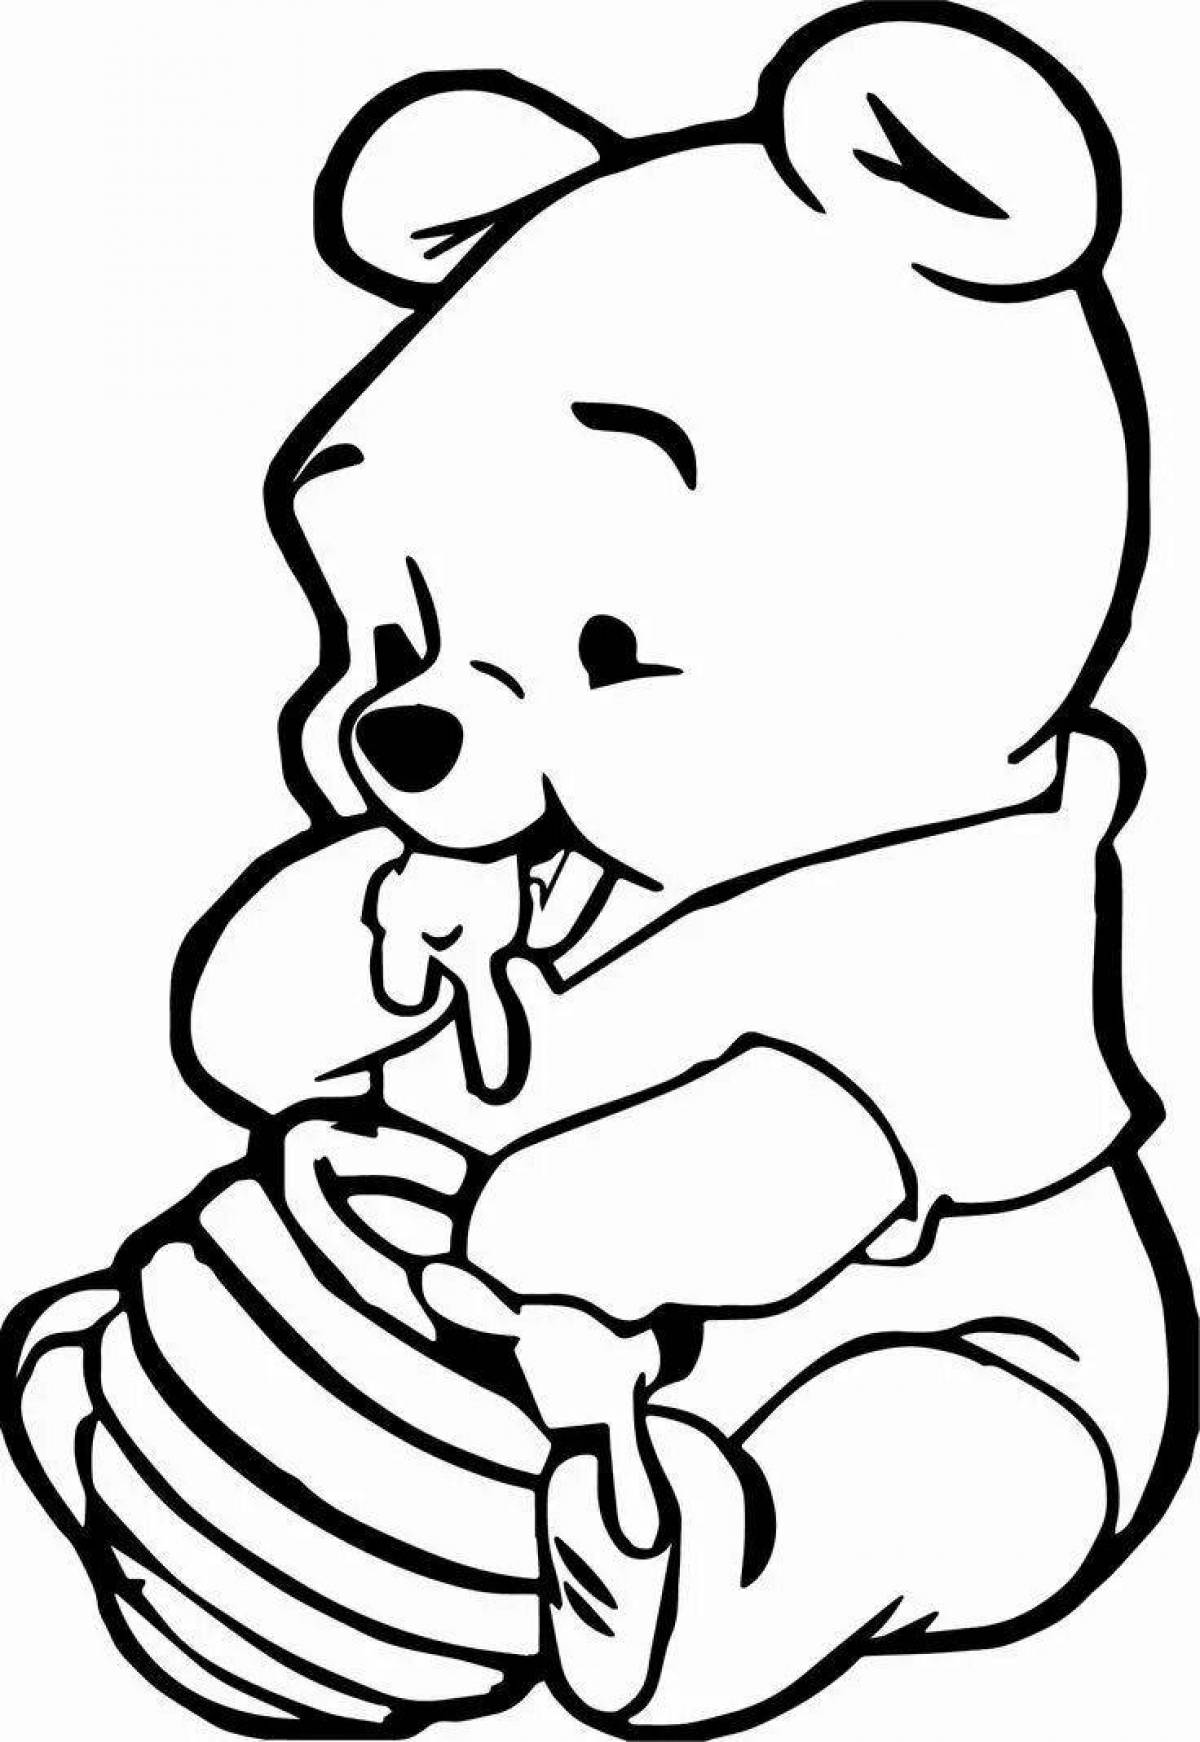 Playful cute teddy bear coloring book